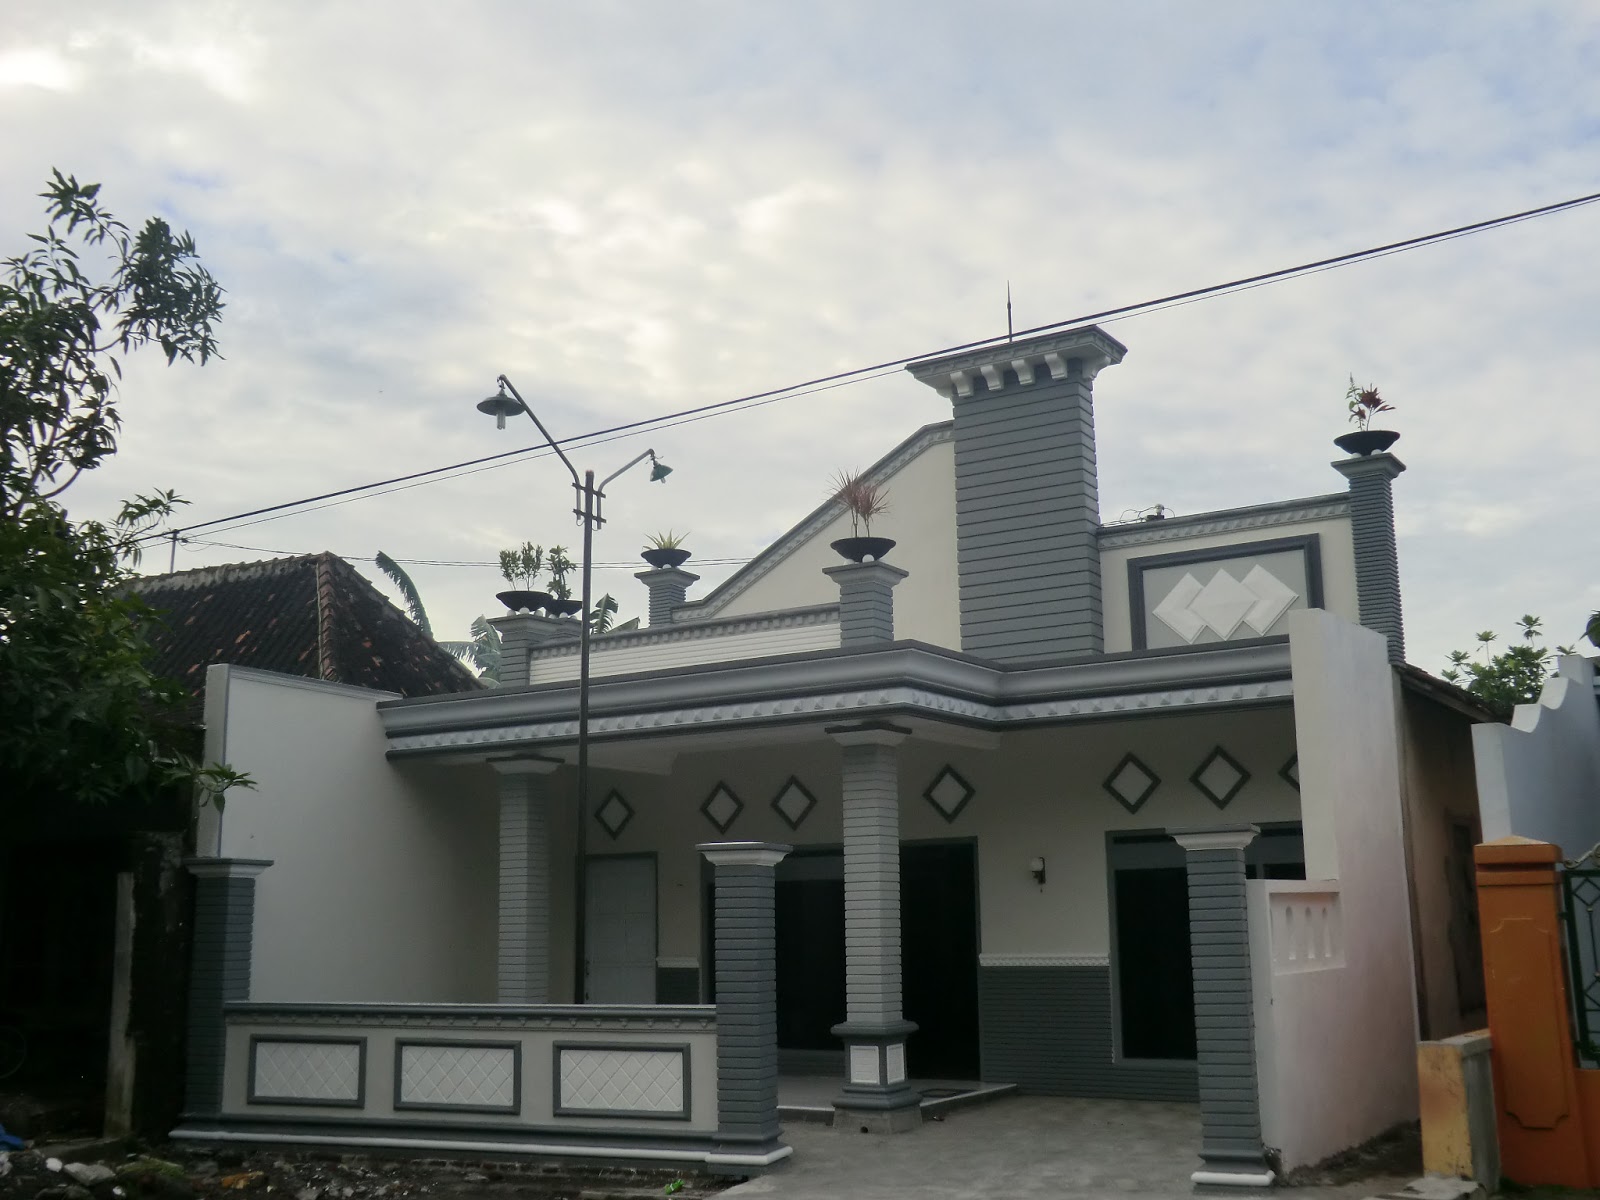 Lihat Megah Jaya Beton Lisplang Gambar  Resplang  Rumah  